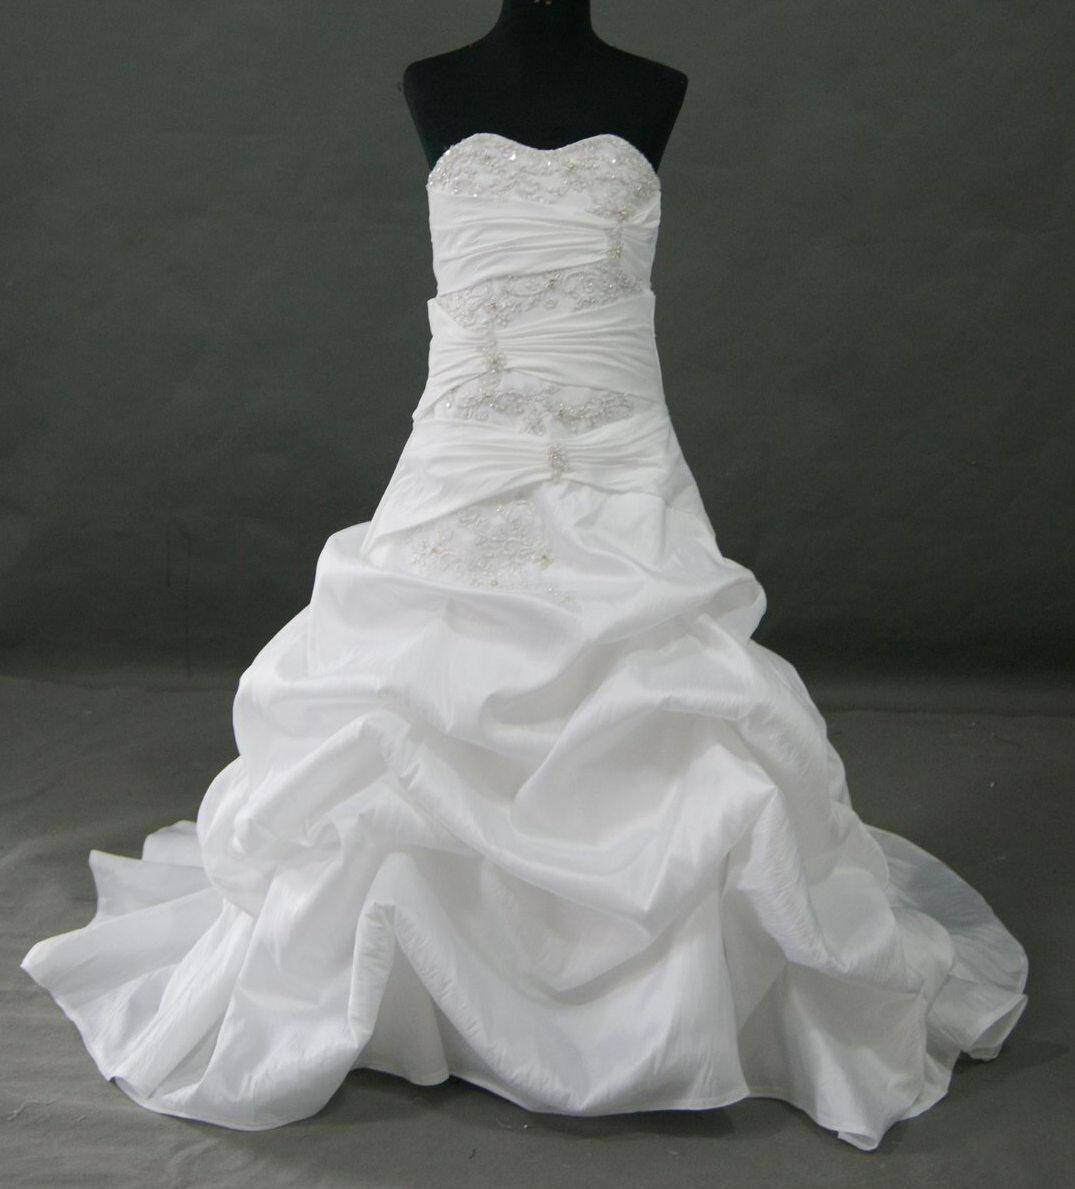 Miniature bride ball gown